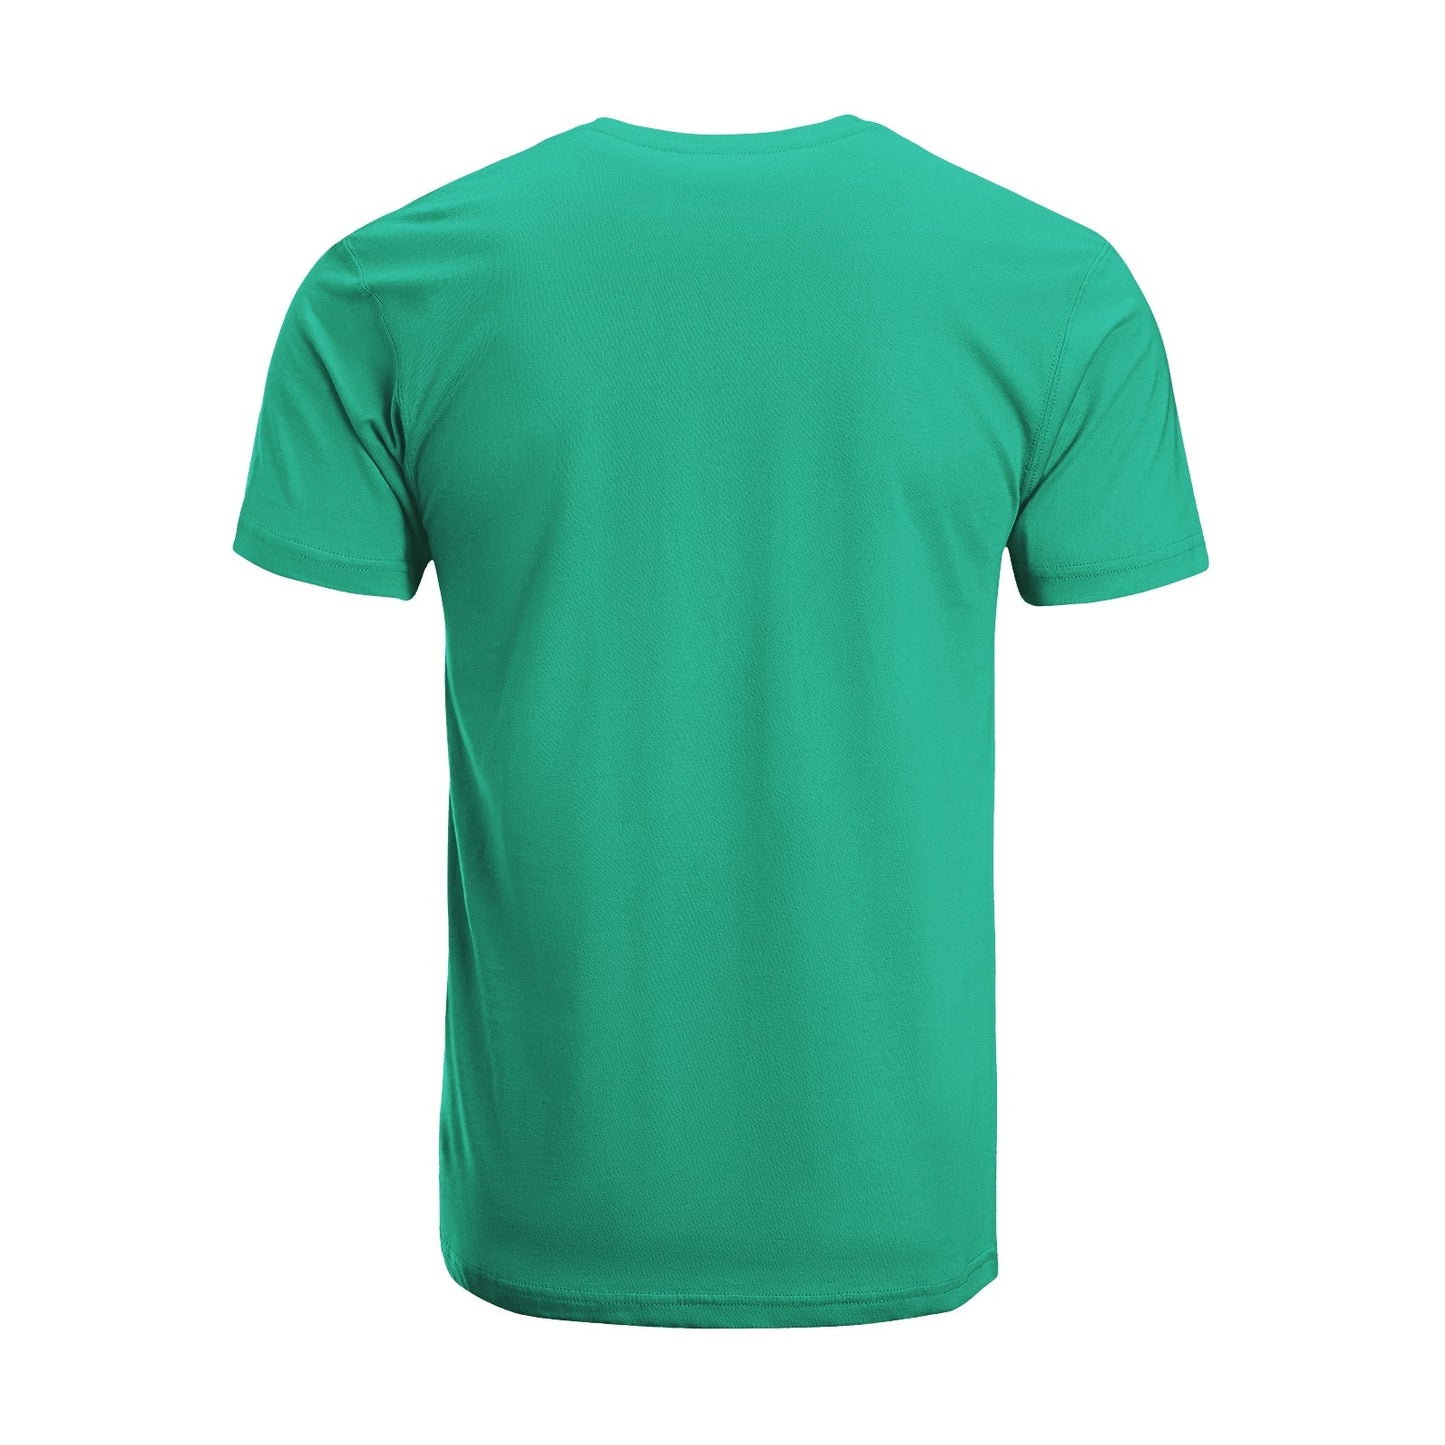 Unisex Short Sleeve Crew Neck Cotton Jersey T-Shirt MOM 03